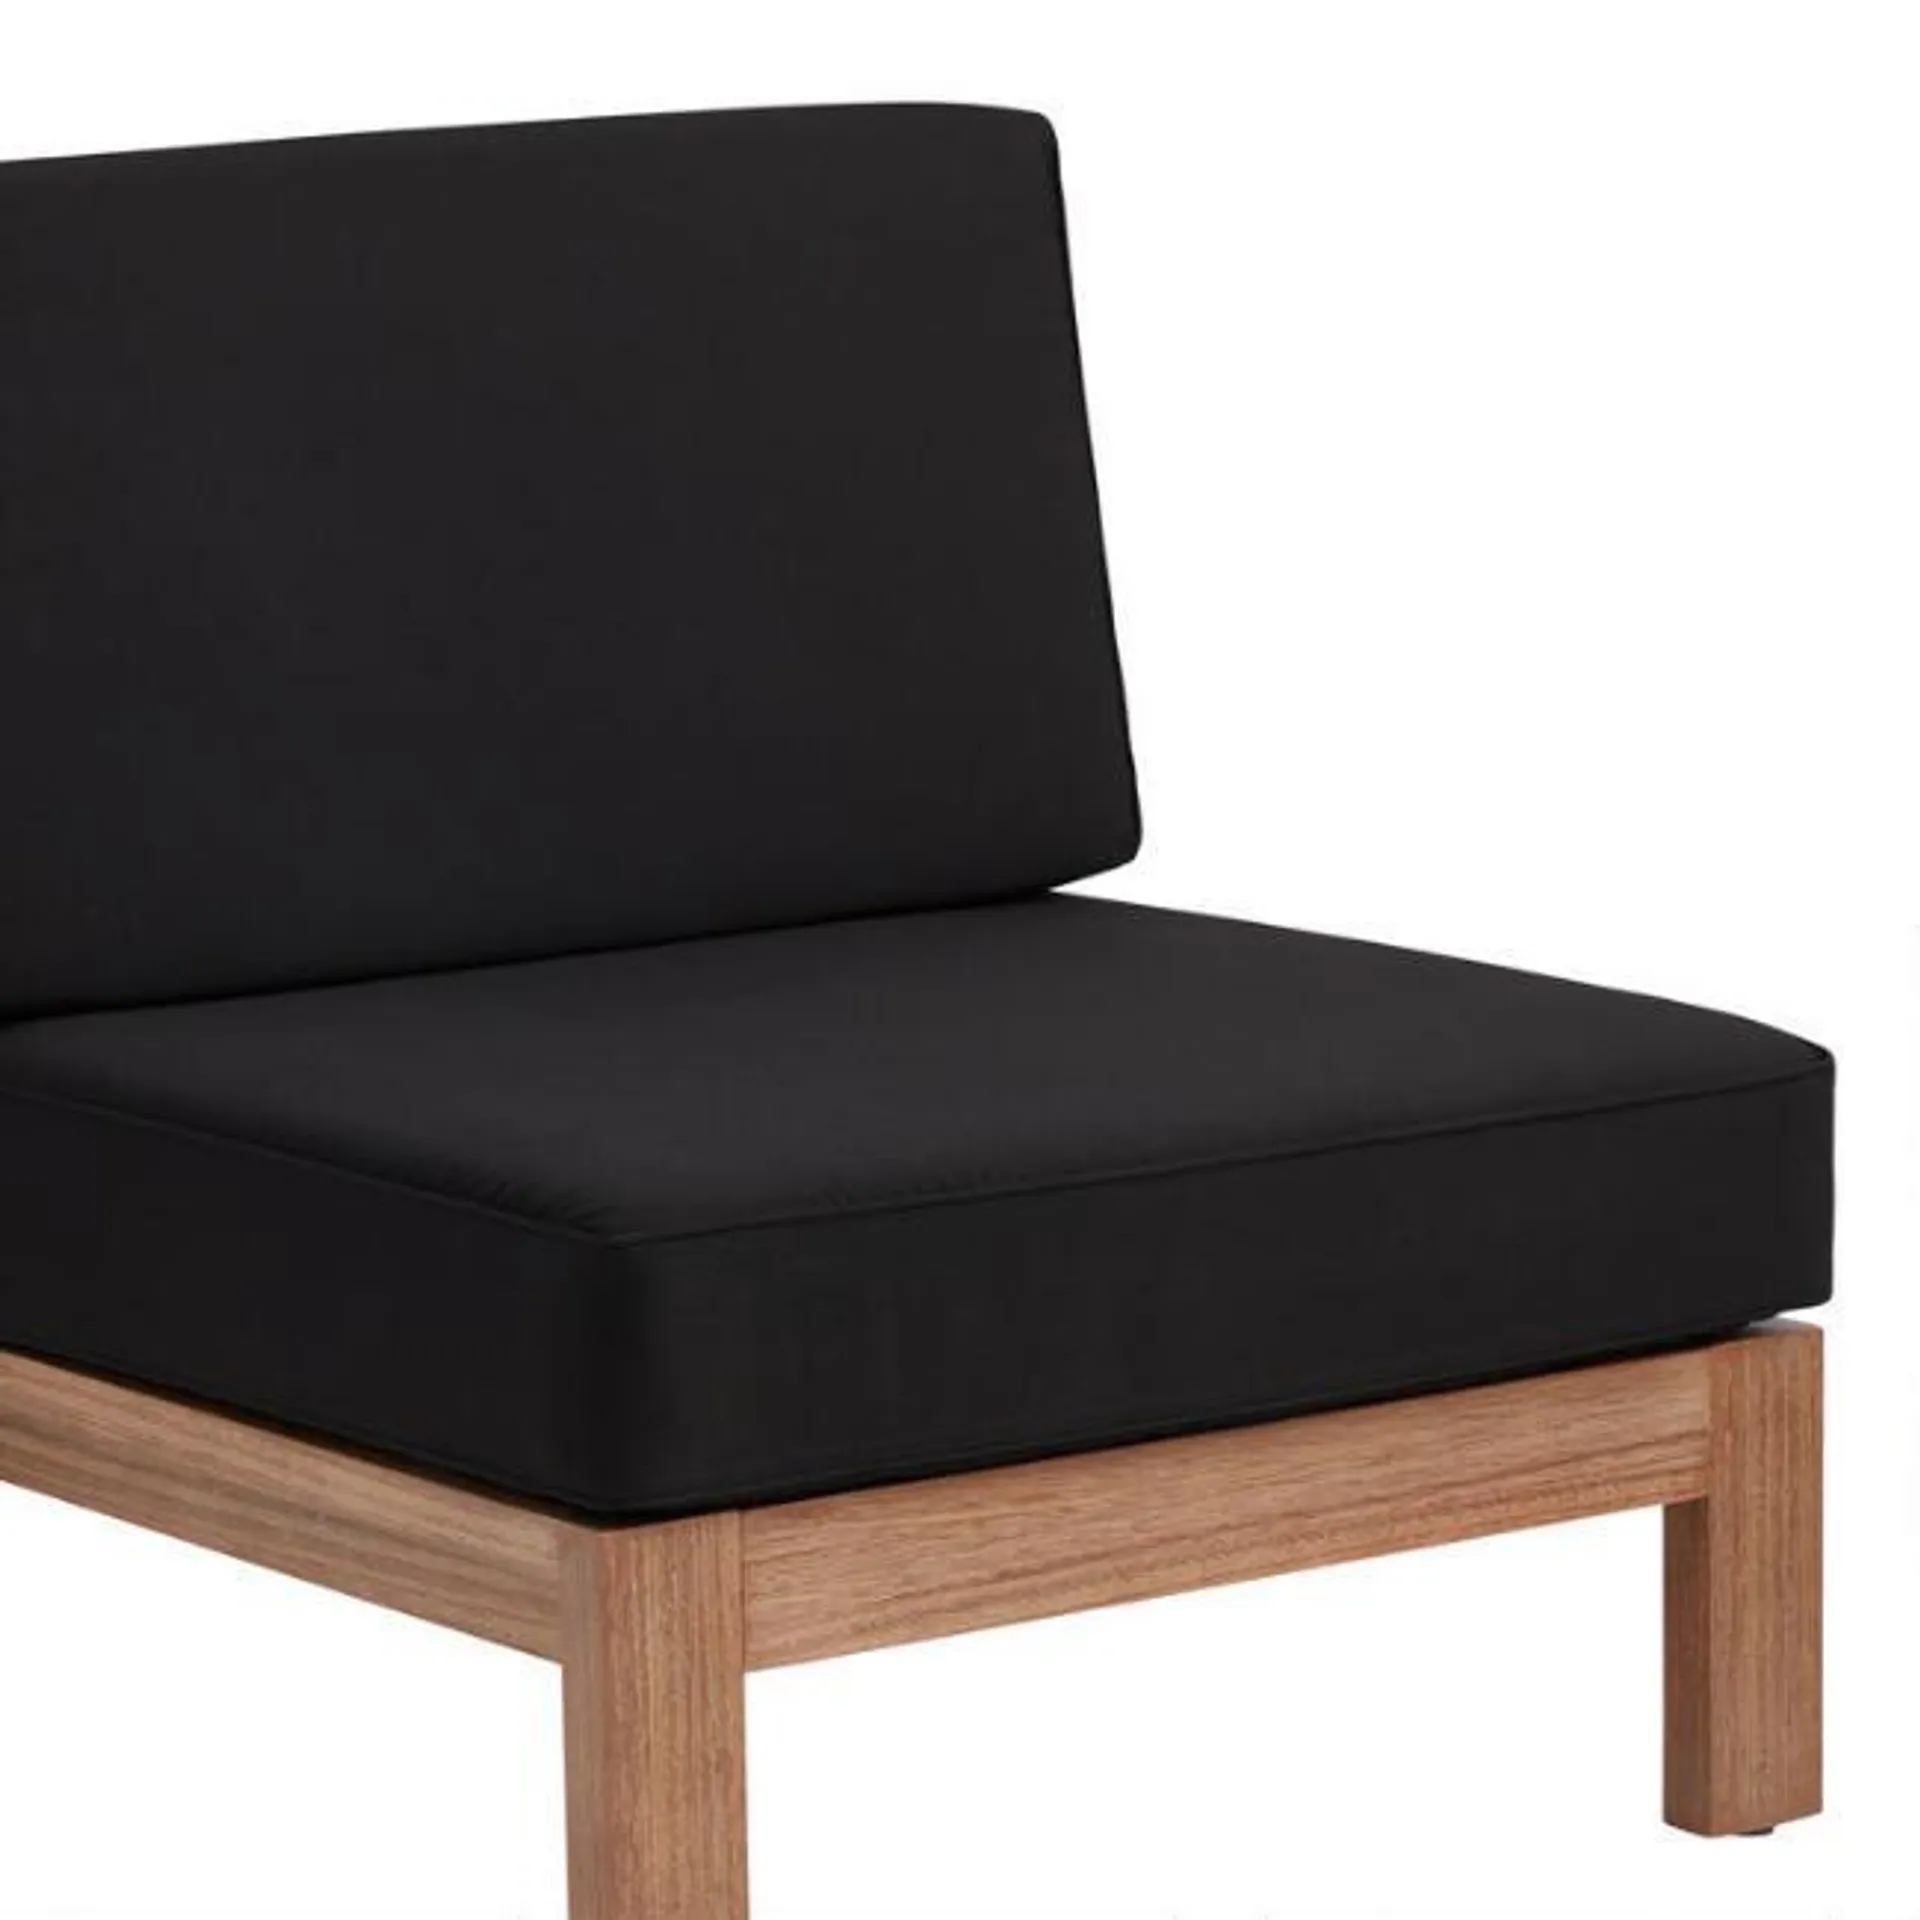 Segovia Outdoor Chair Cushion Covers